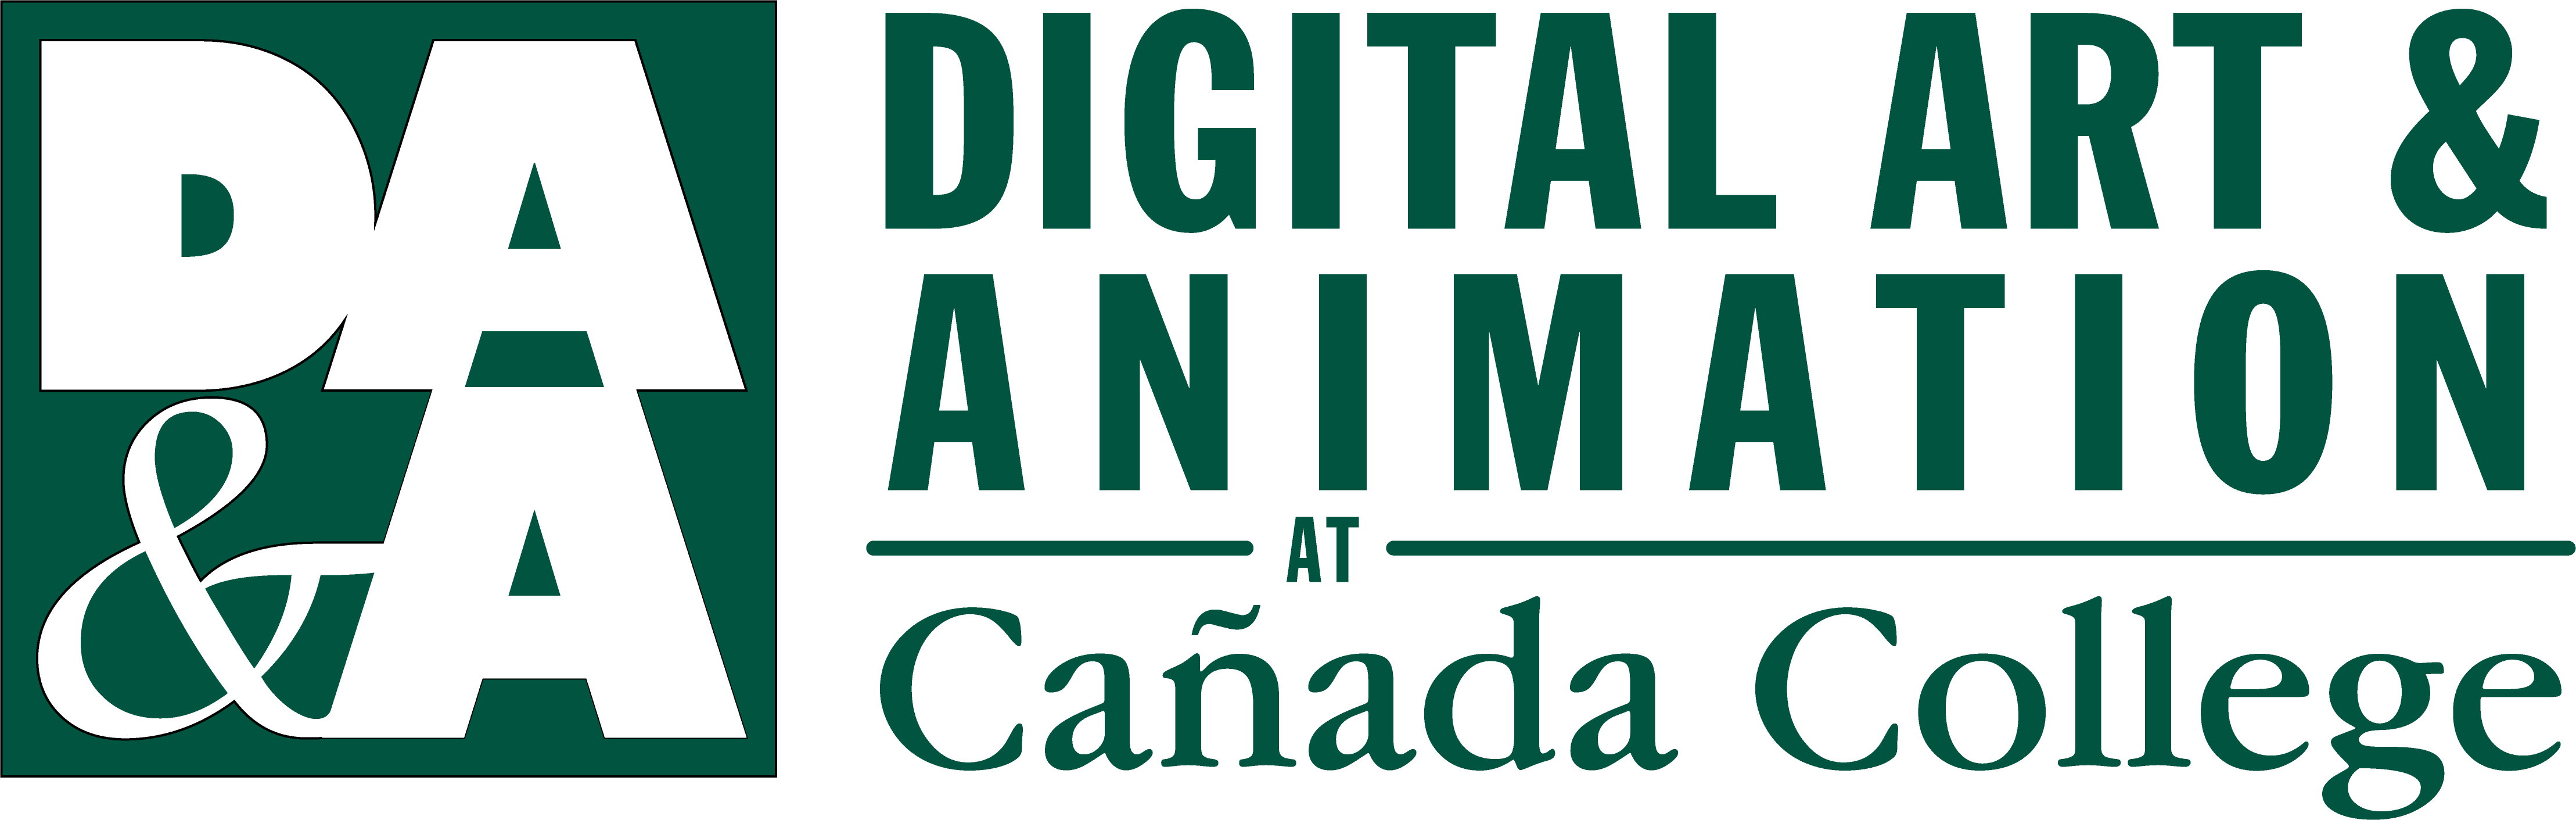 digital art and animation logo